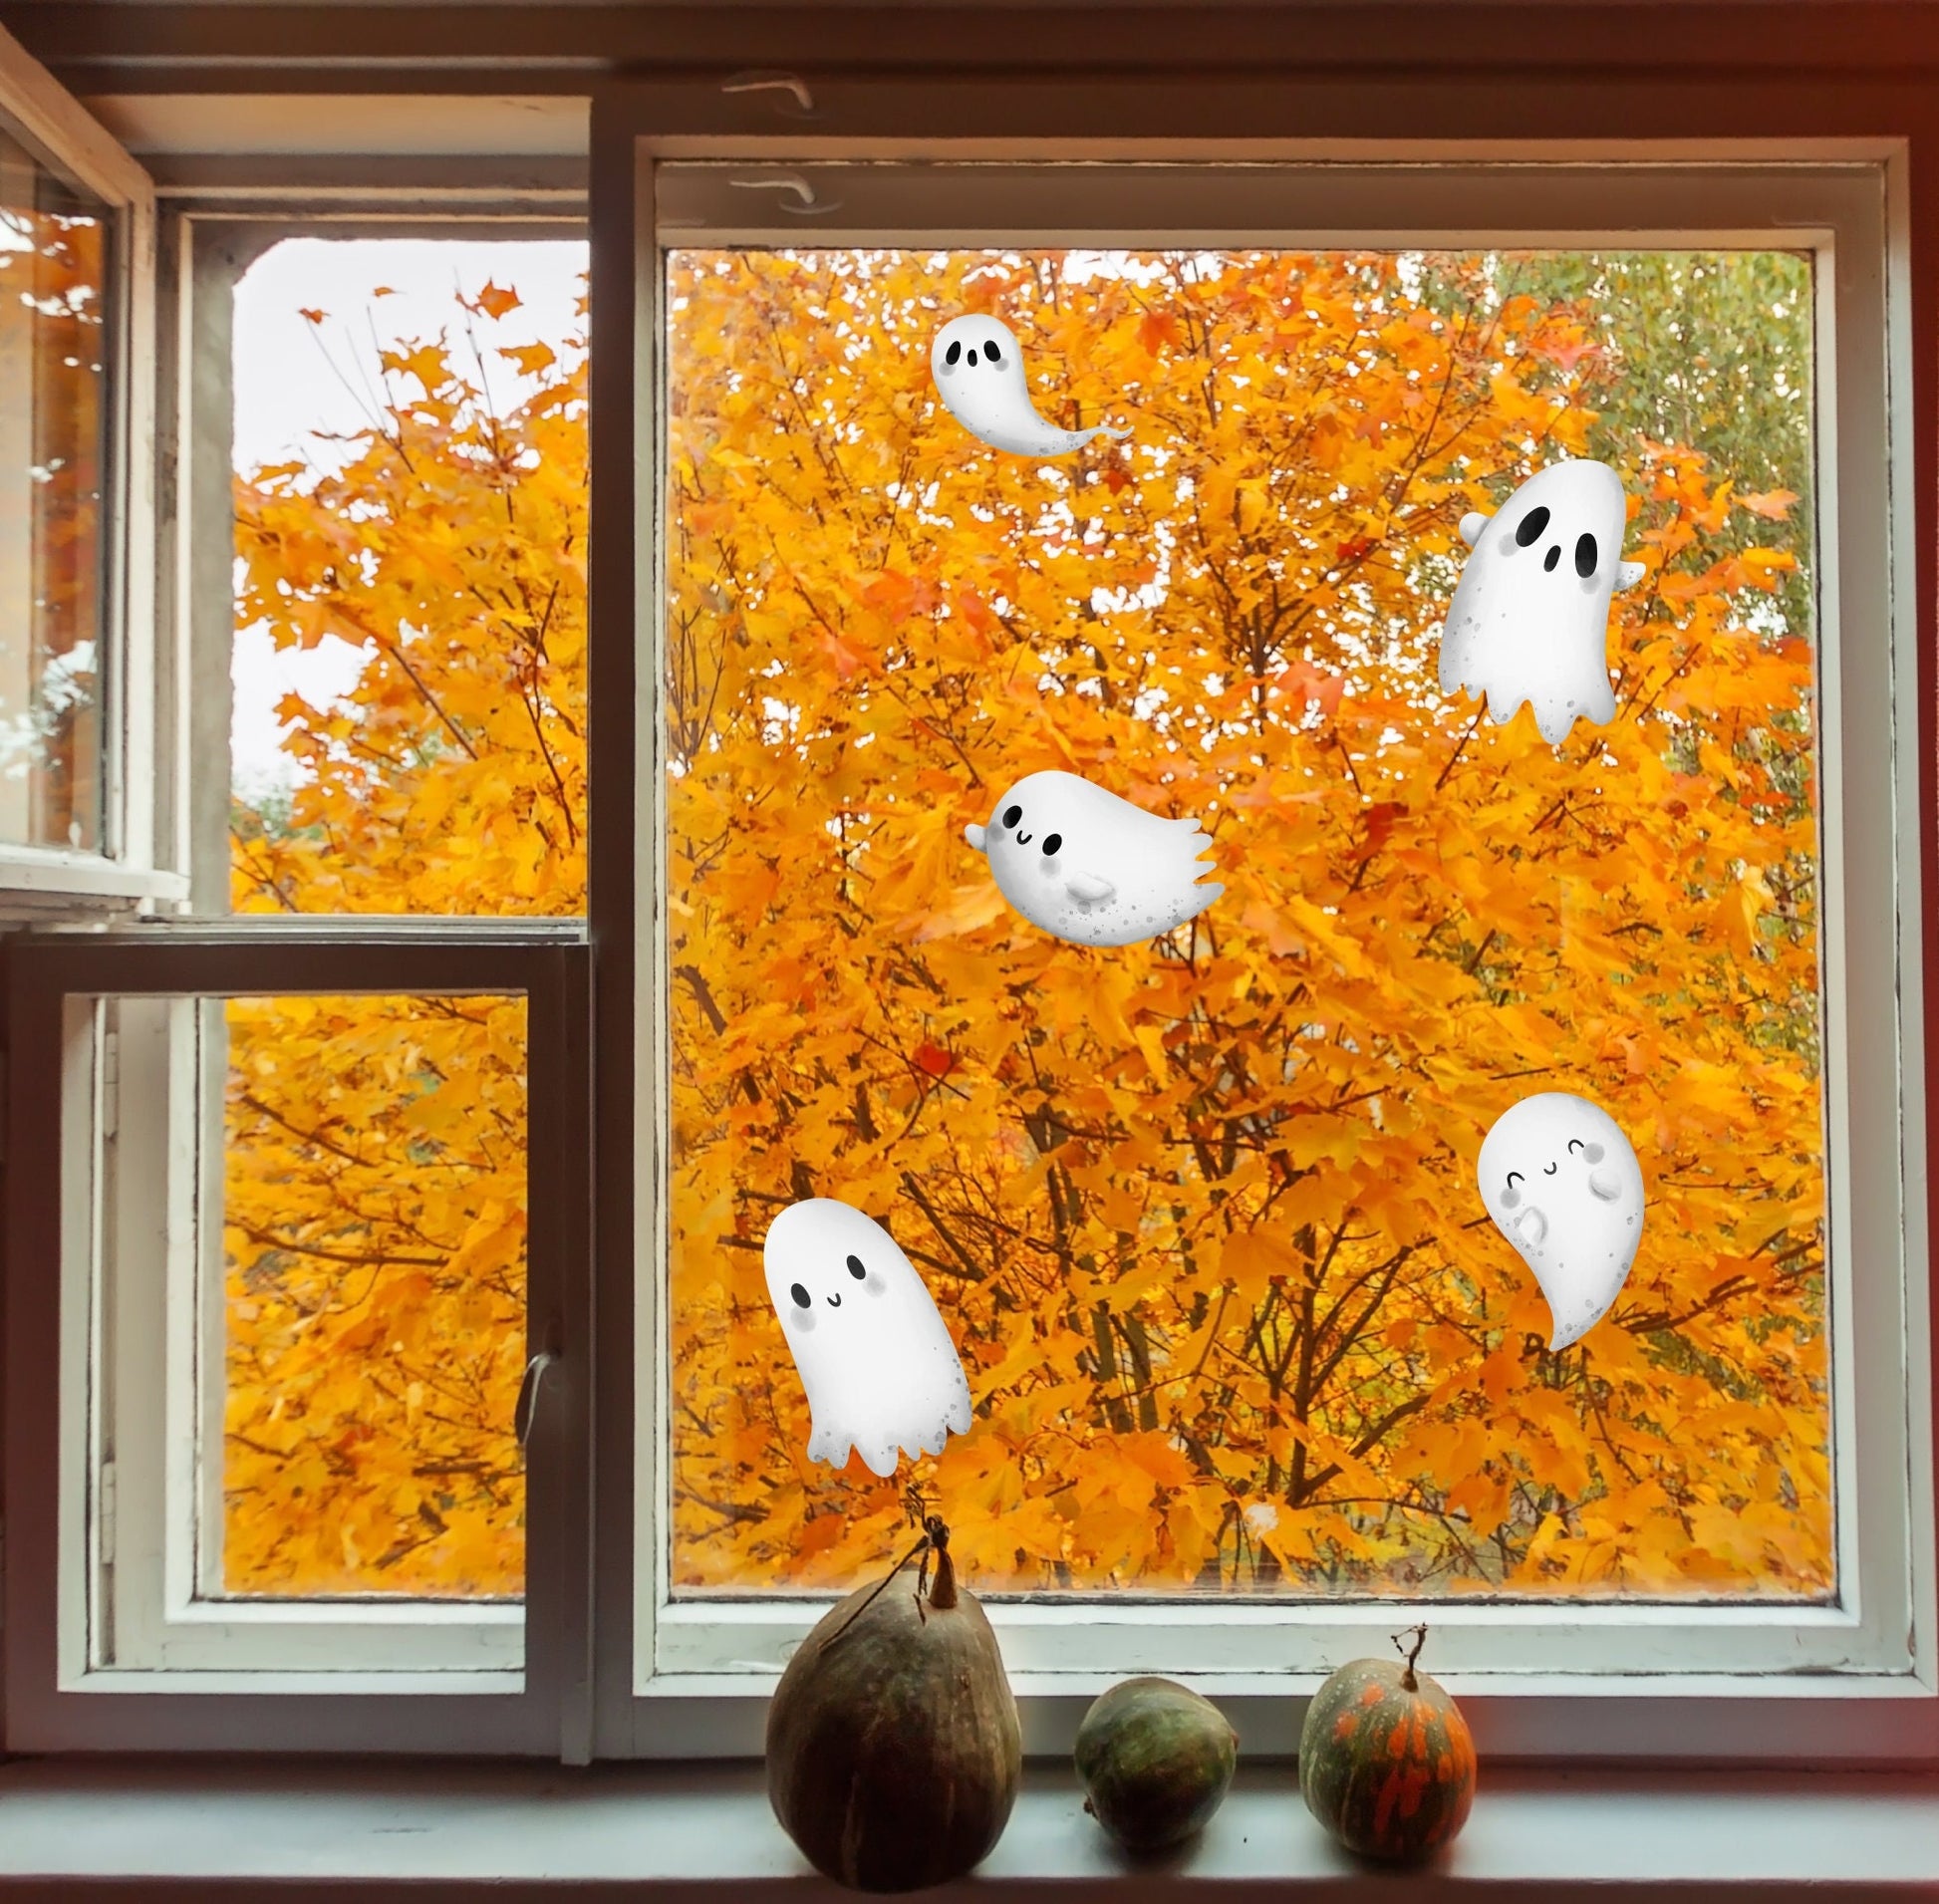 Cute Ghosts Halloween Window Stickers Decals Spooky Vinyl Removable Peel & Stick Reusable